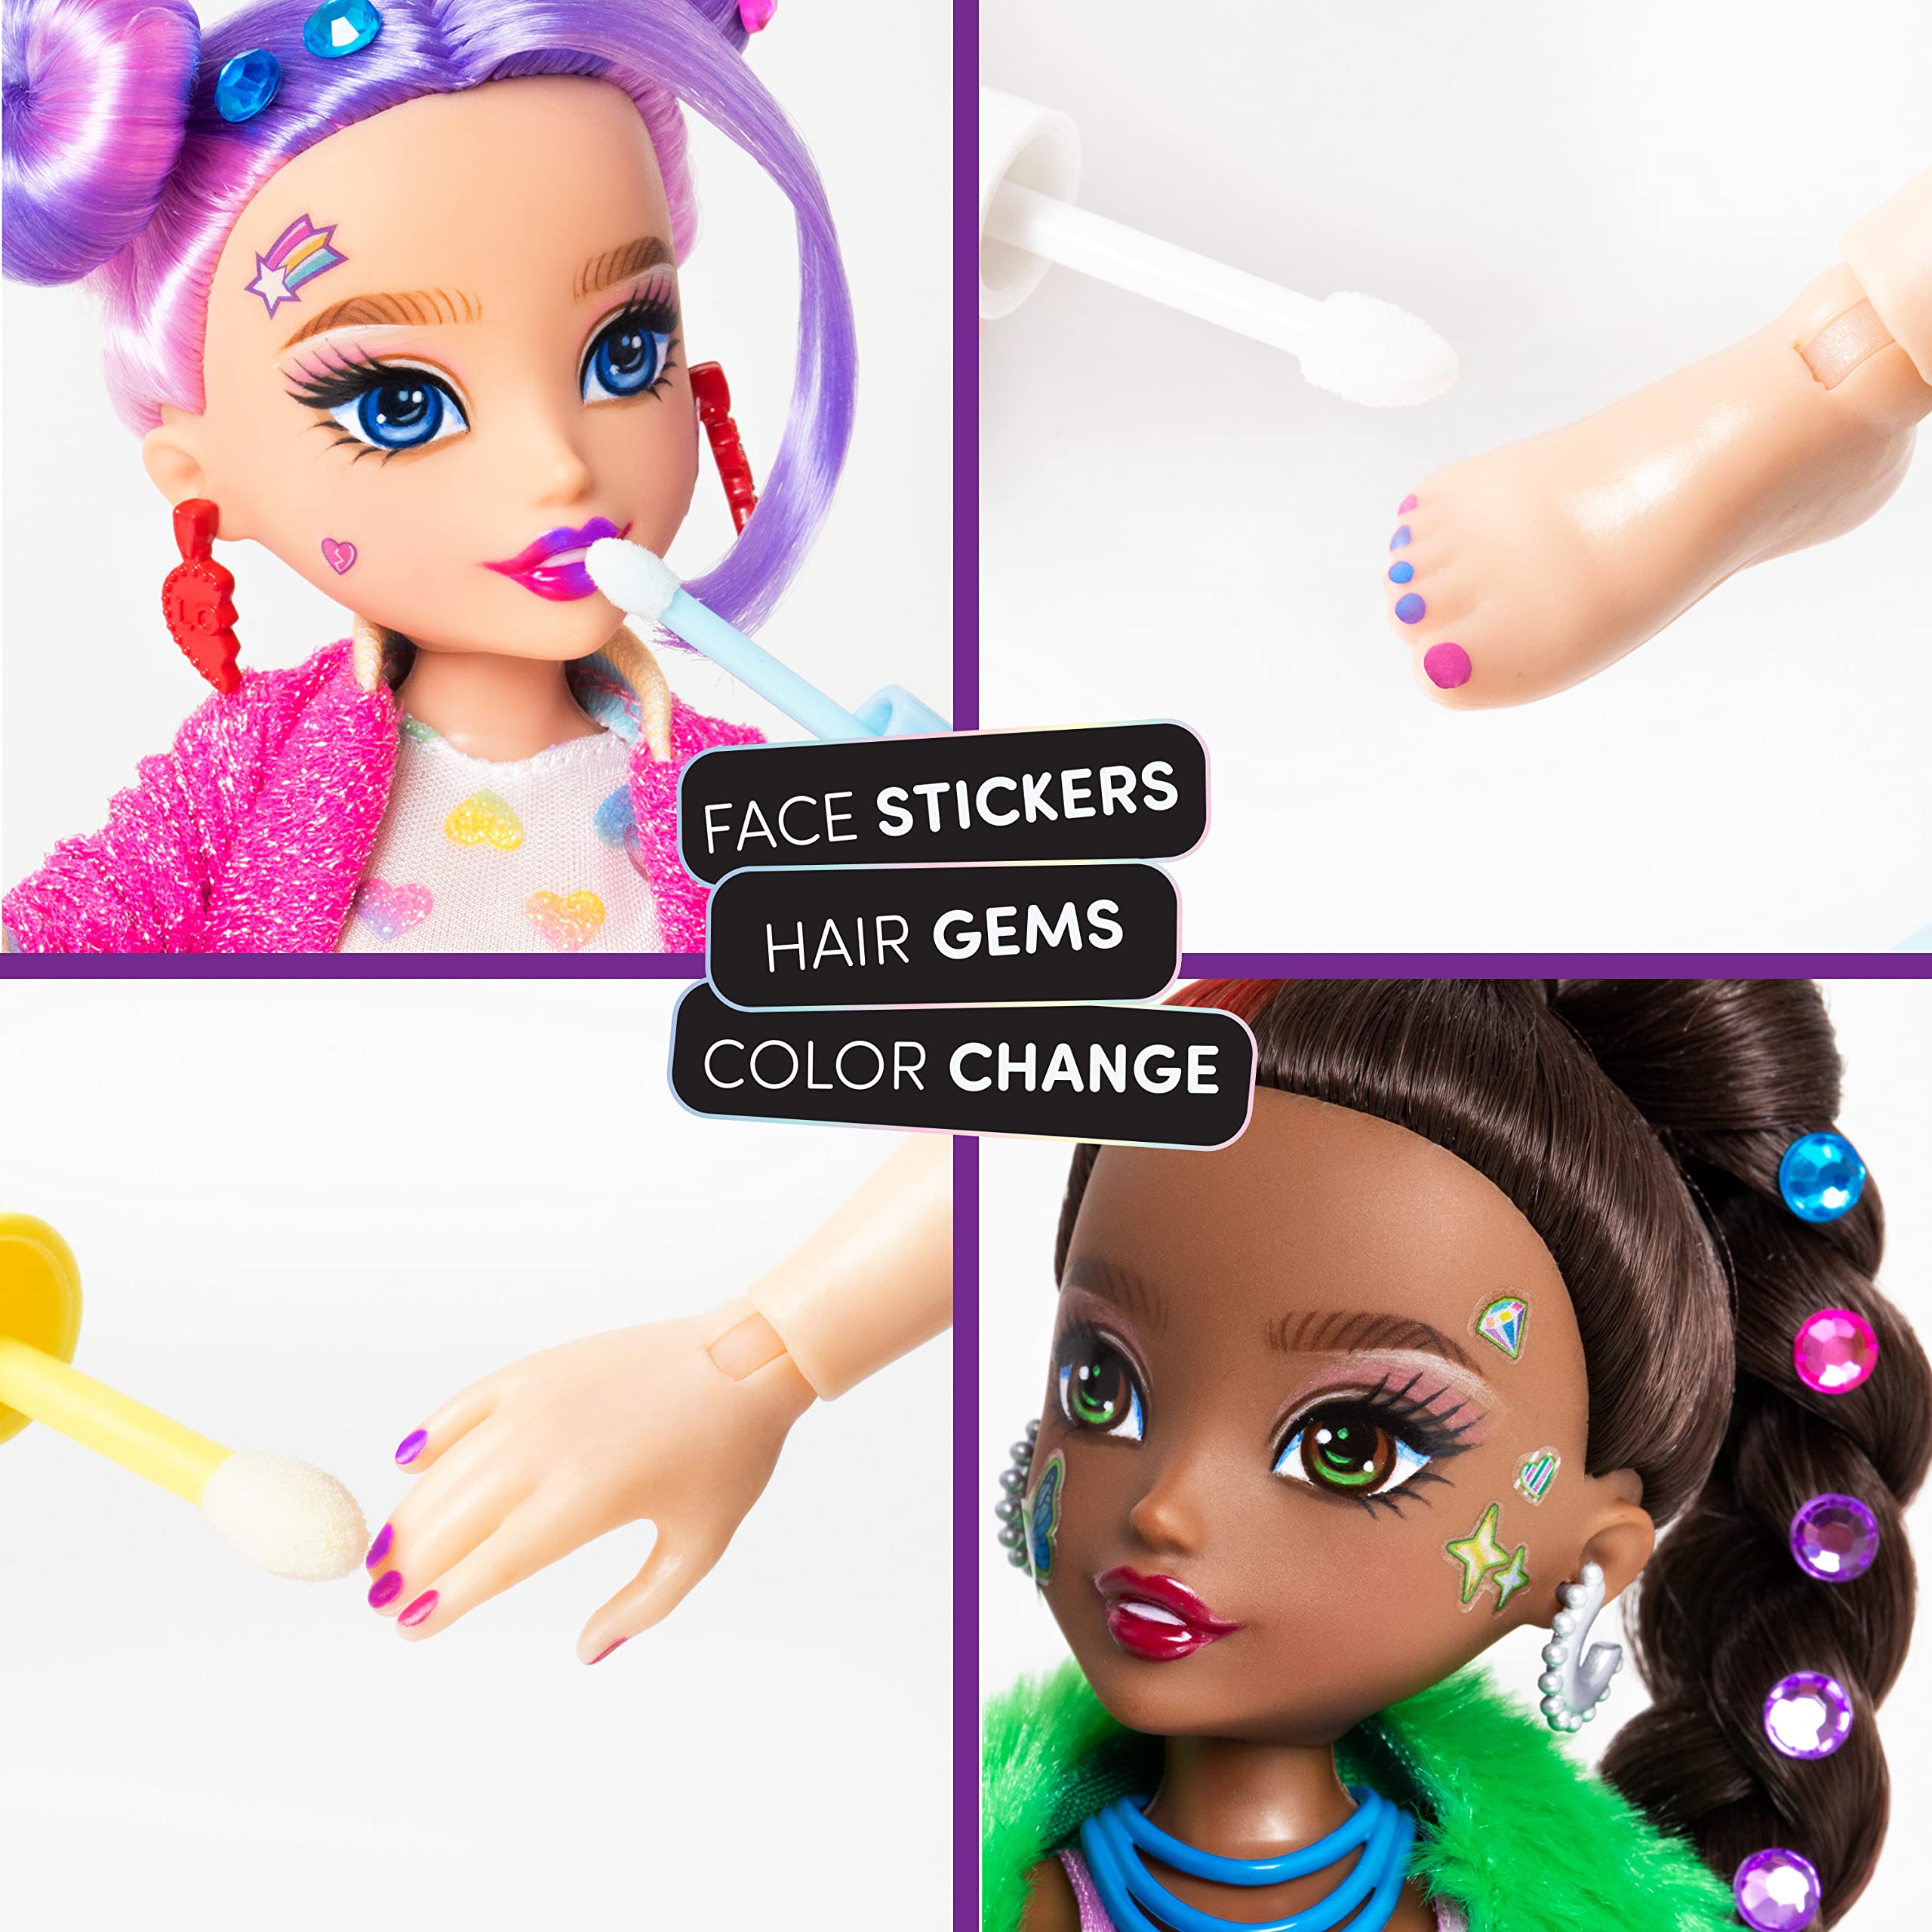 GLO-UP - Muñeca de moda con diseño de pelirroja rosa para niñas, joyas deslumbrantes, gemas para el cabello, accesorios, moda, calcomanías faciales, maquillaje, uñas